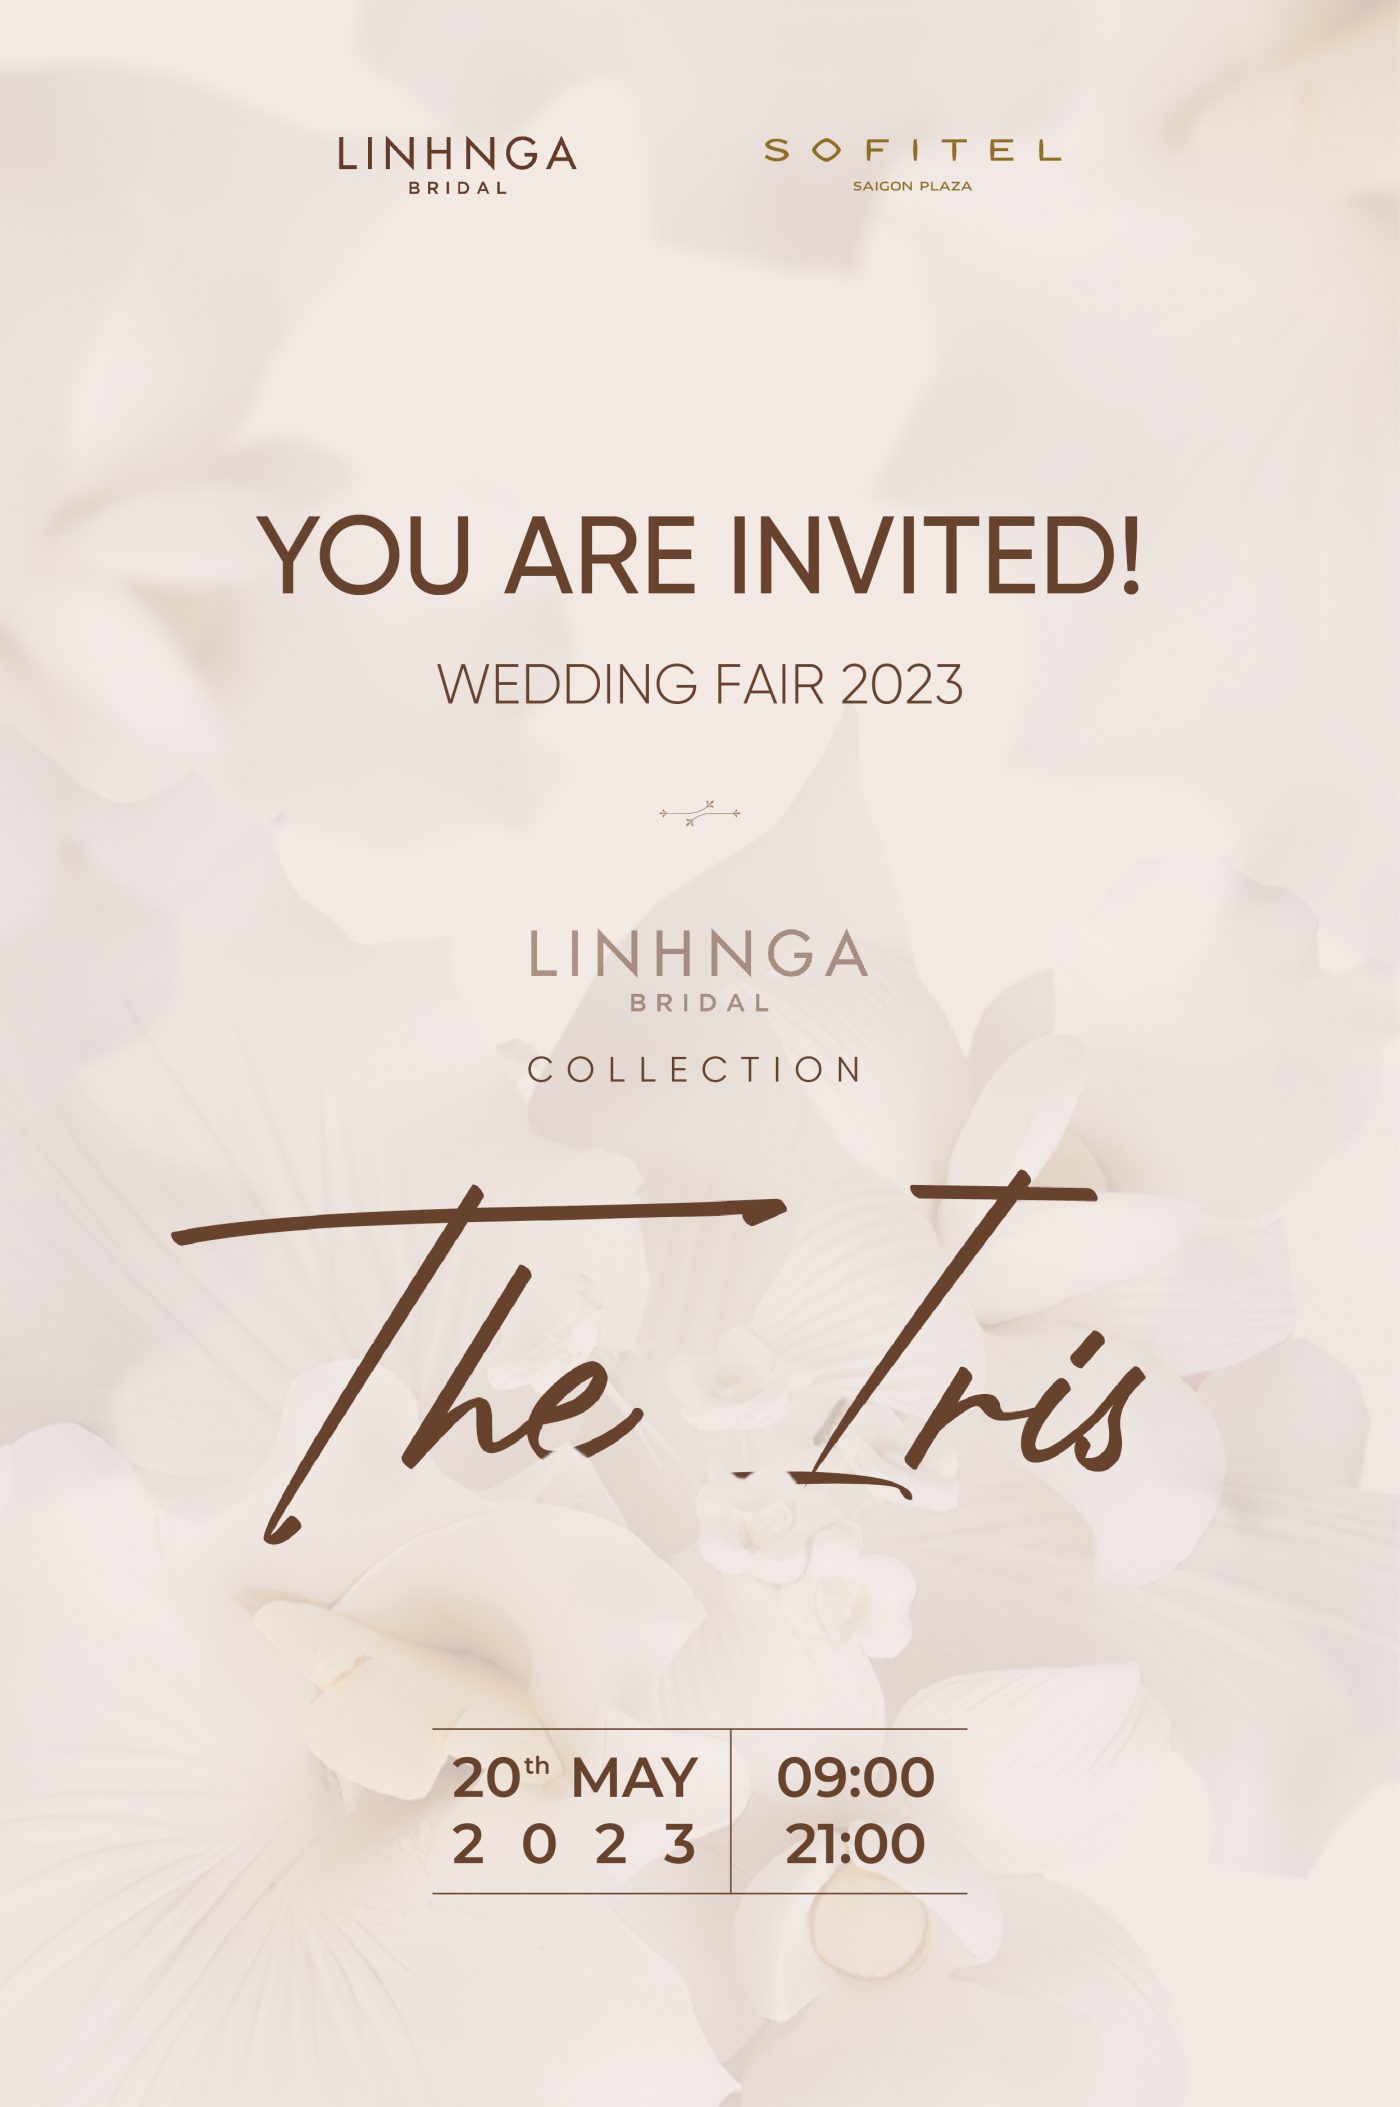 LINH NGA BRIDAL RA MẮT BST “THE IRIS” TẠI WEDDING FAIR 2023 